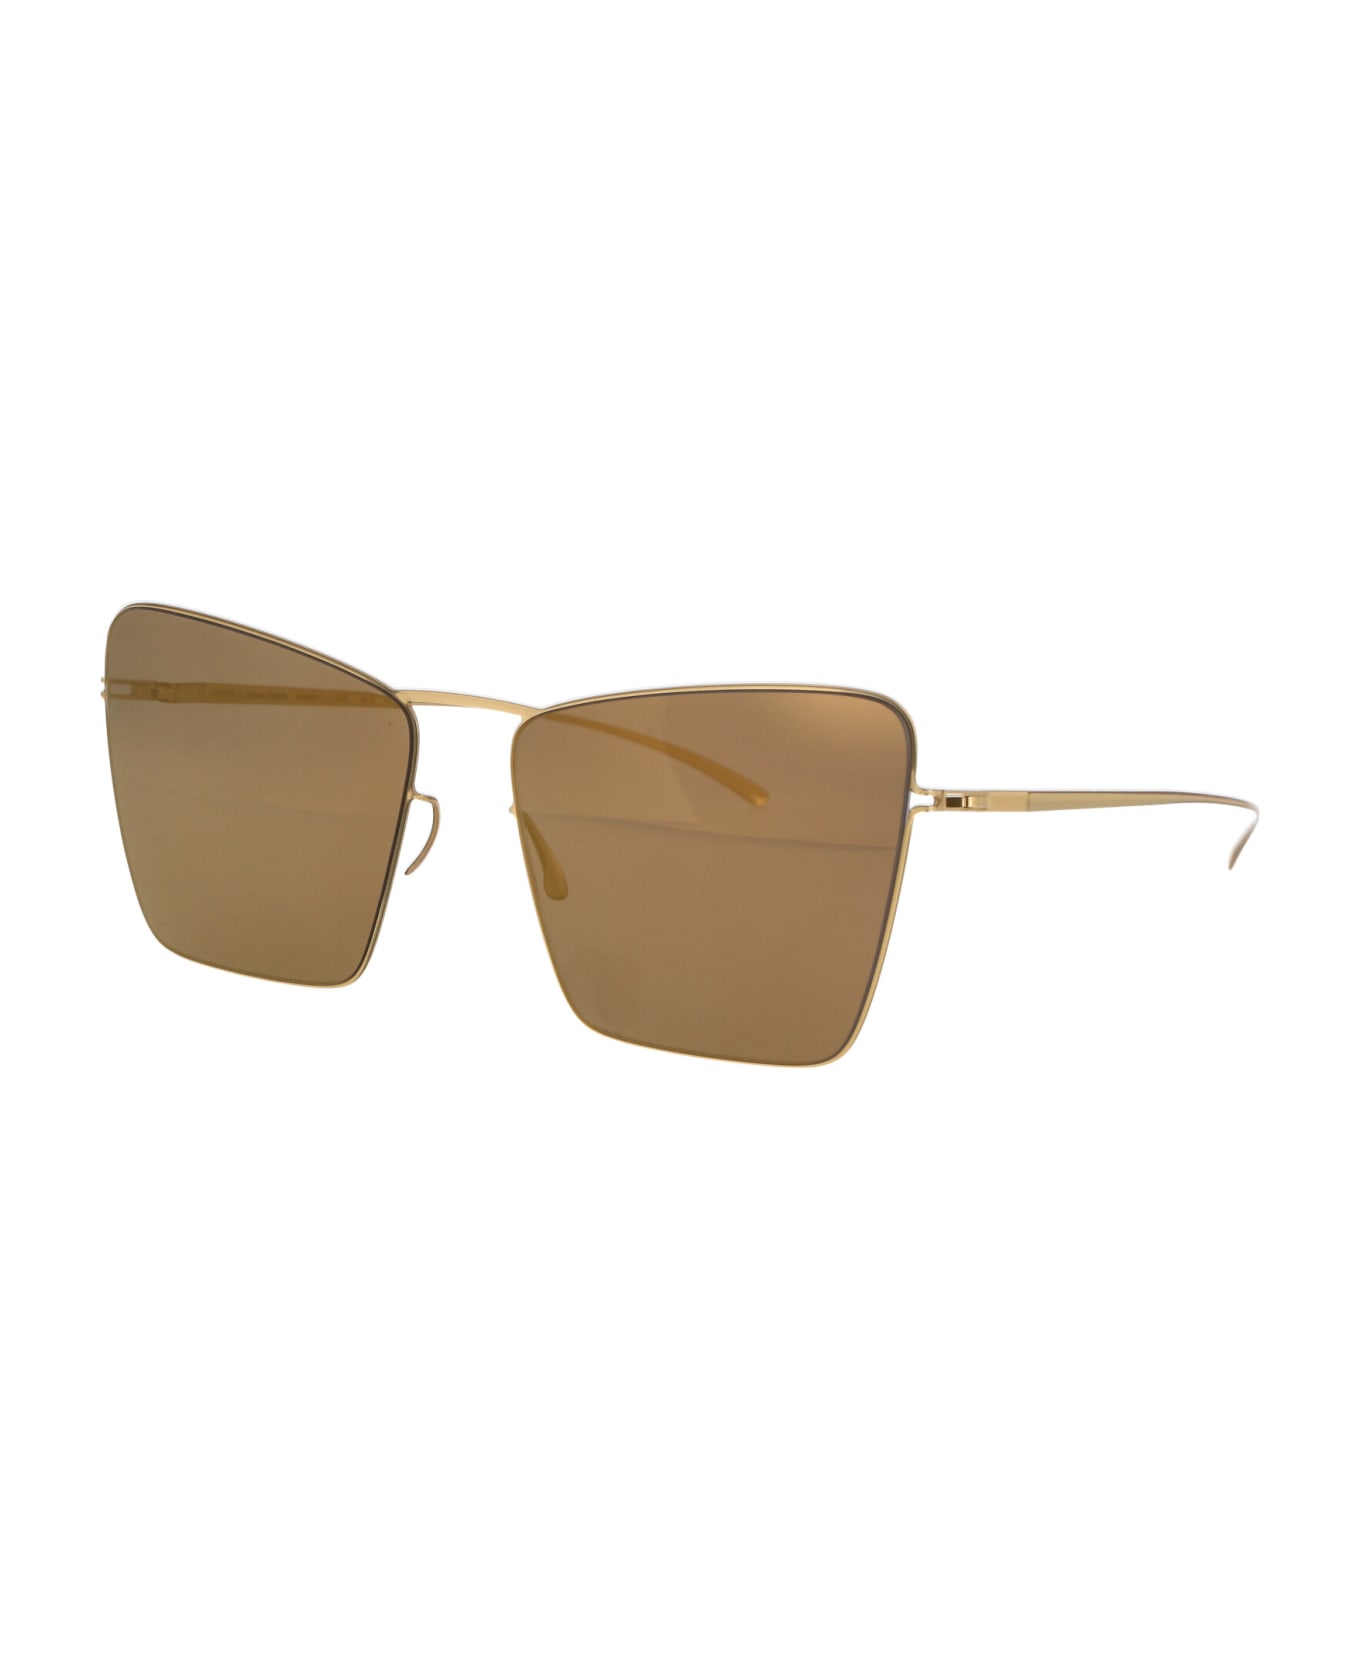 Mykita Mmesse014 Sunglasses - 188 E2 Gold Gold Flash